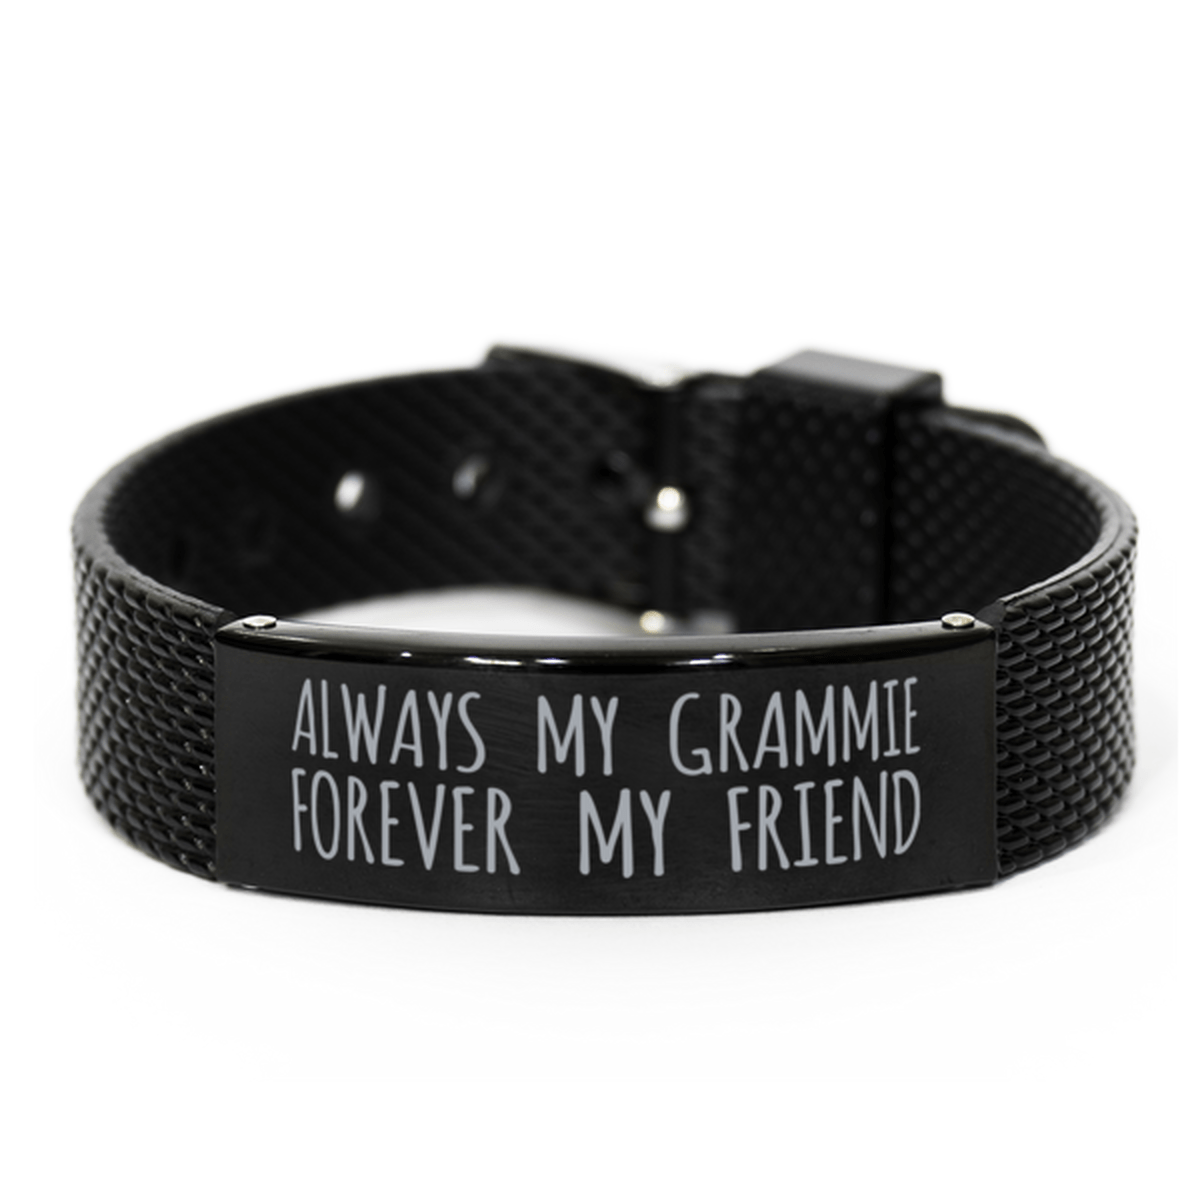 Inspirational Grammie Black Shark Mesh Bracelet, Always My Grammie Forever My Friend, Best Birthday Gifts for Family Friends